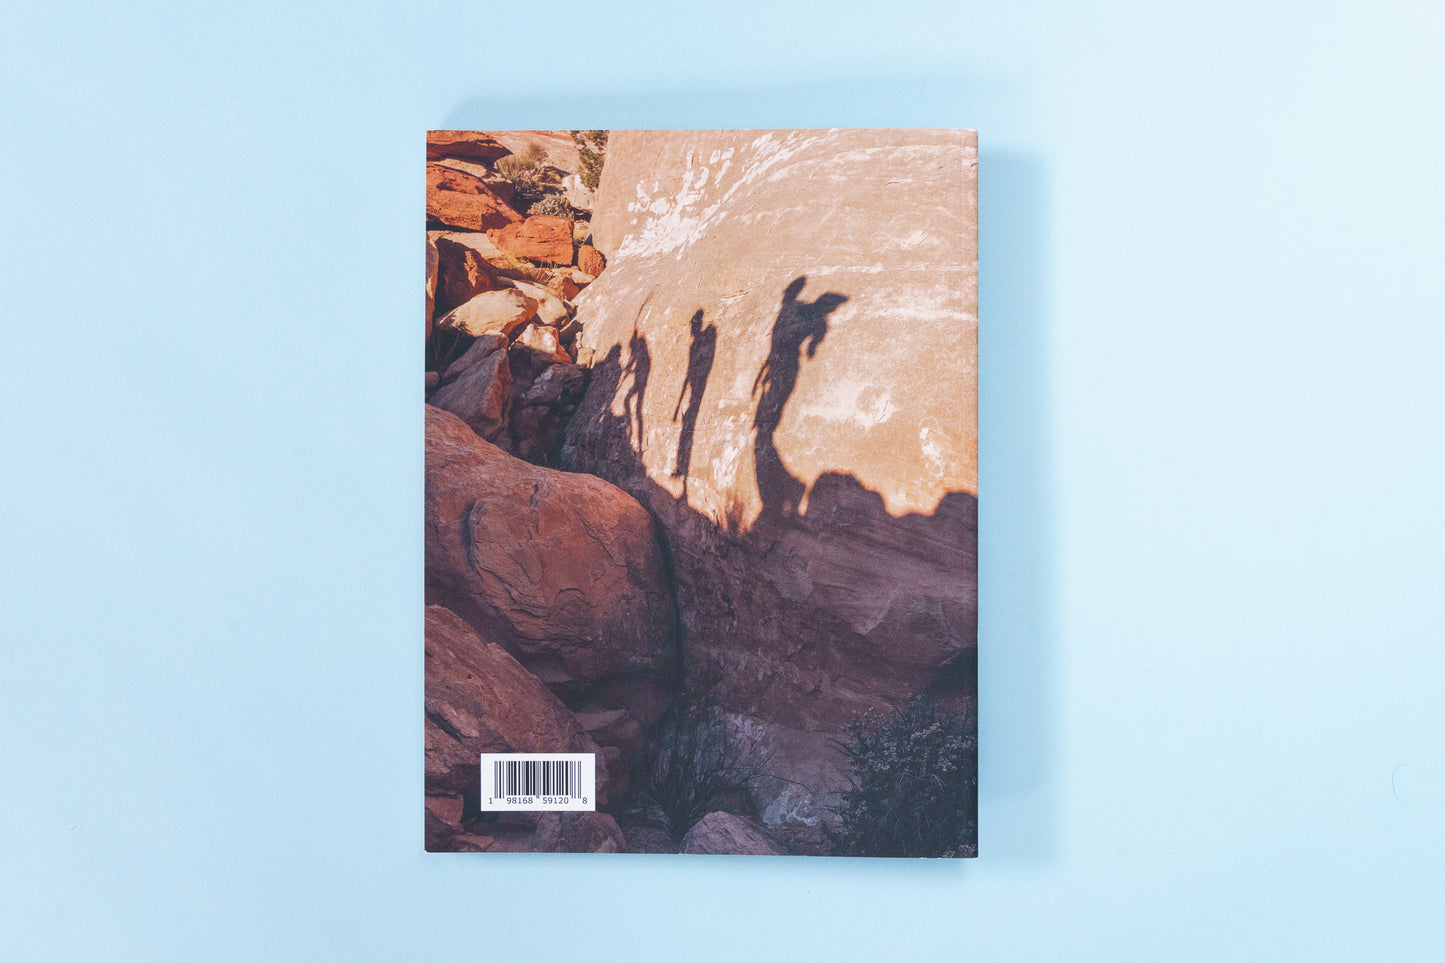 Trails Magazine Issue 6